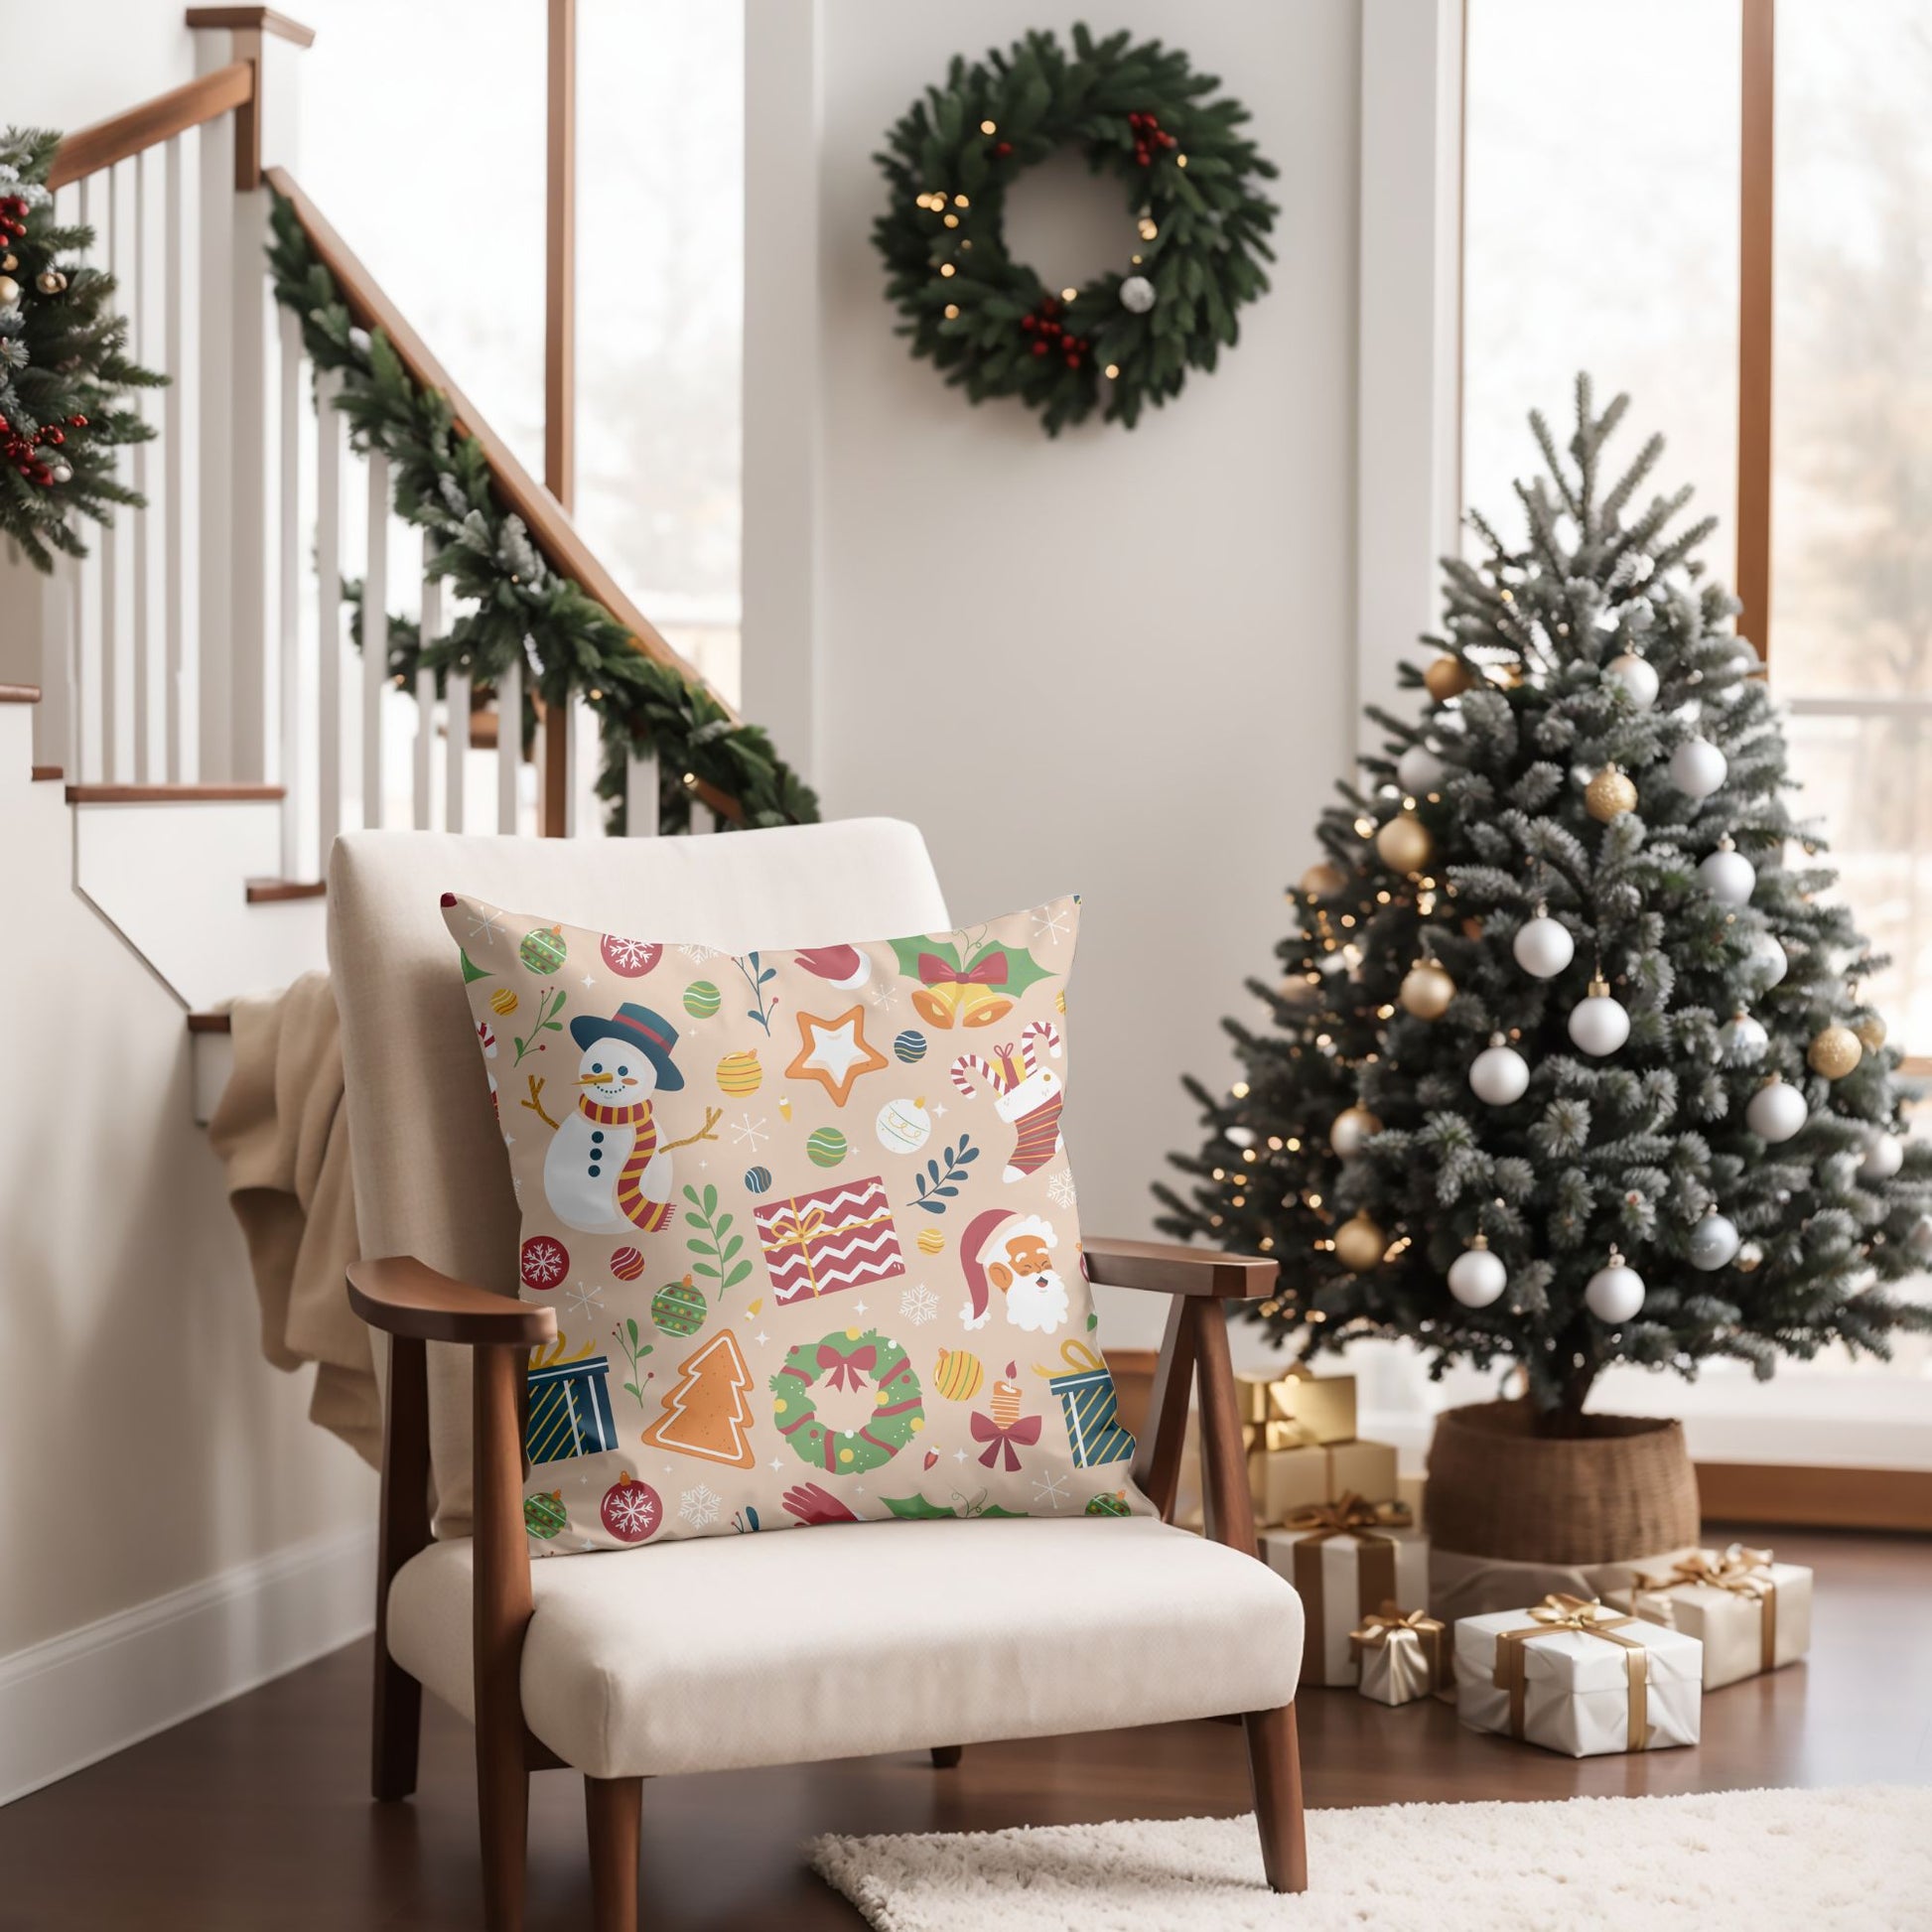 Tartan Pattern Christmas Cushion Cover for Classic Decor